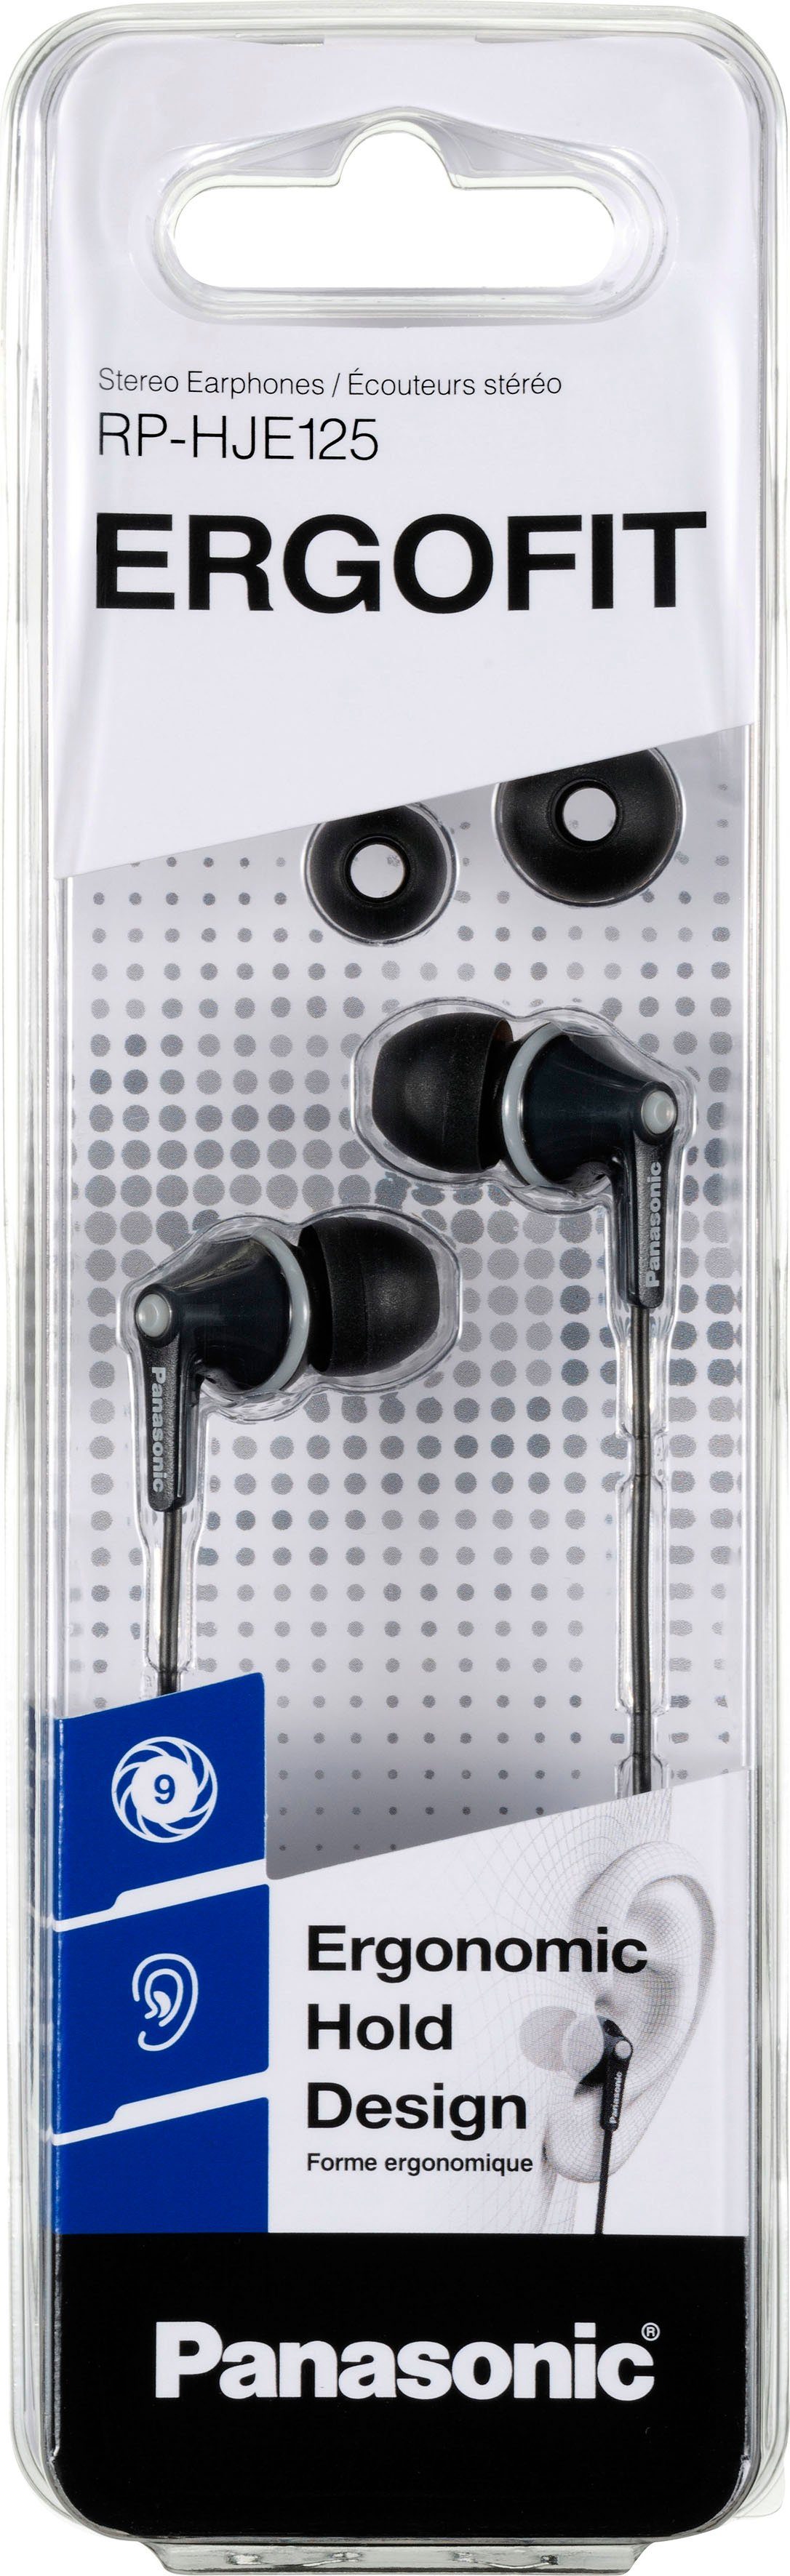 RP-HJE125 schwarz In-Ear-Kopfhörer Panasonic